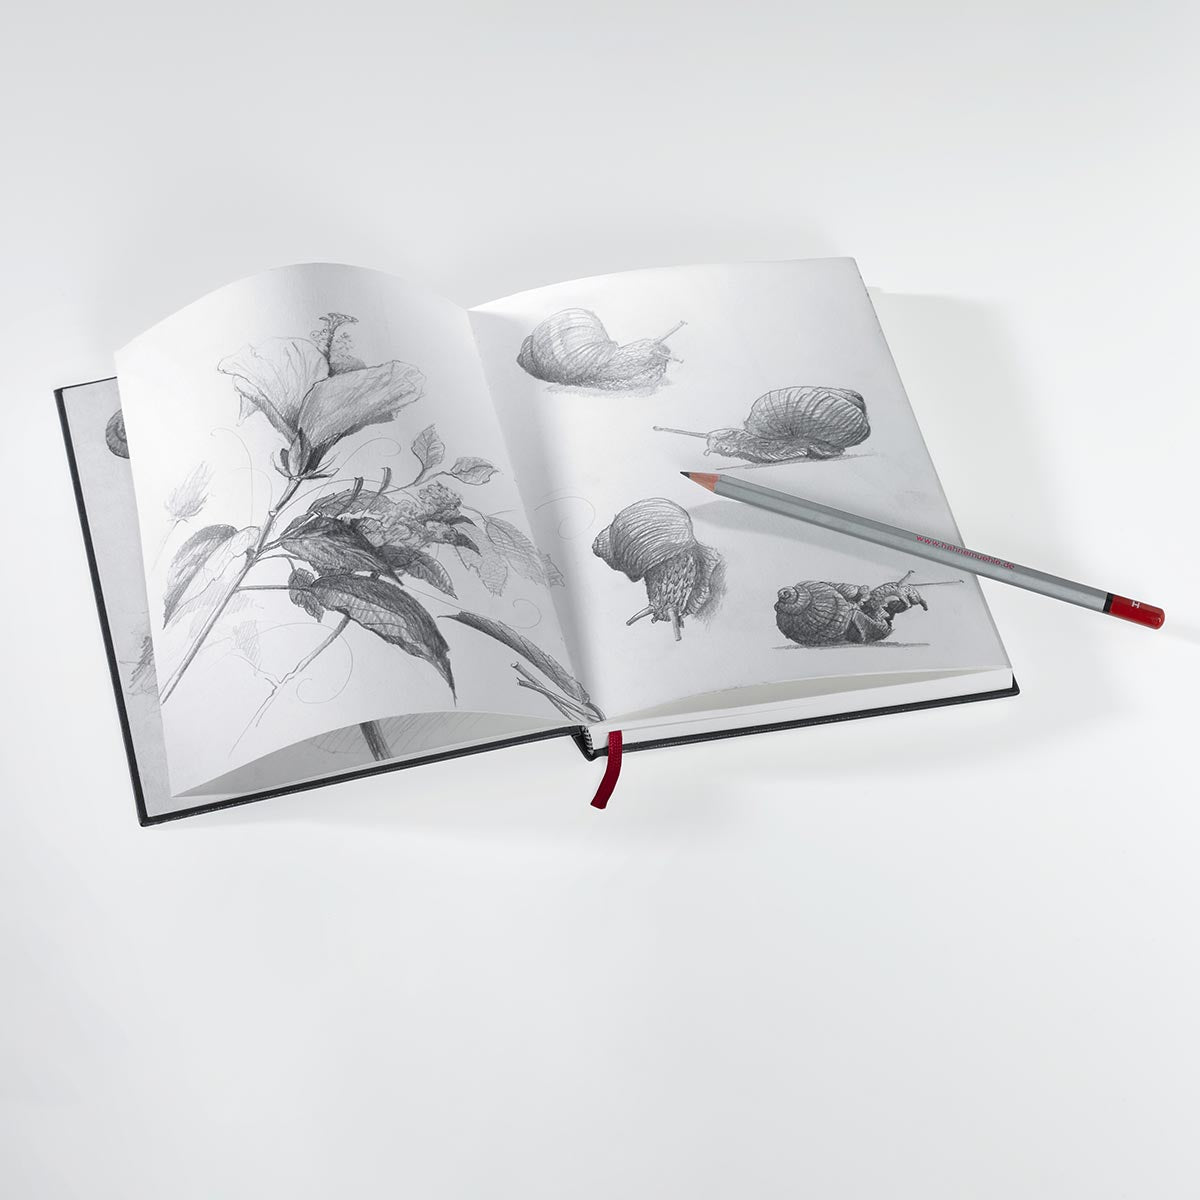 Hahnemuhle - Nostalgie Sketch Book - A4 190gsm - Portrait